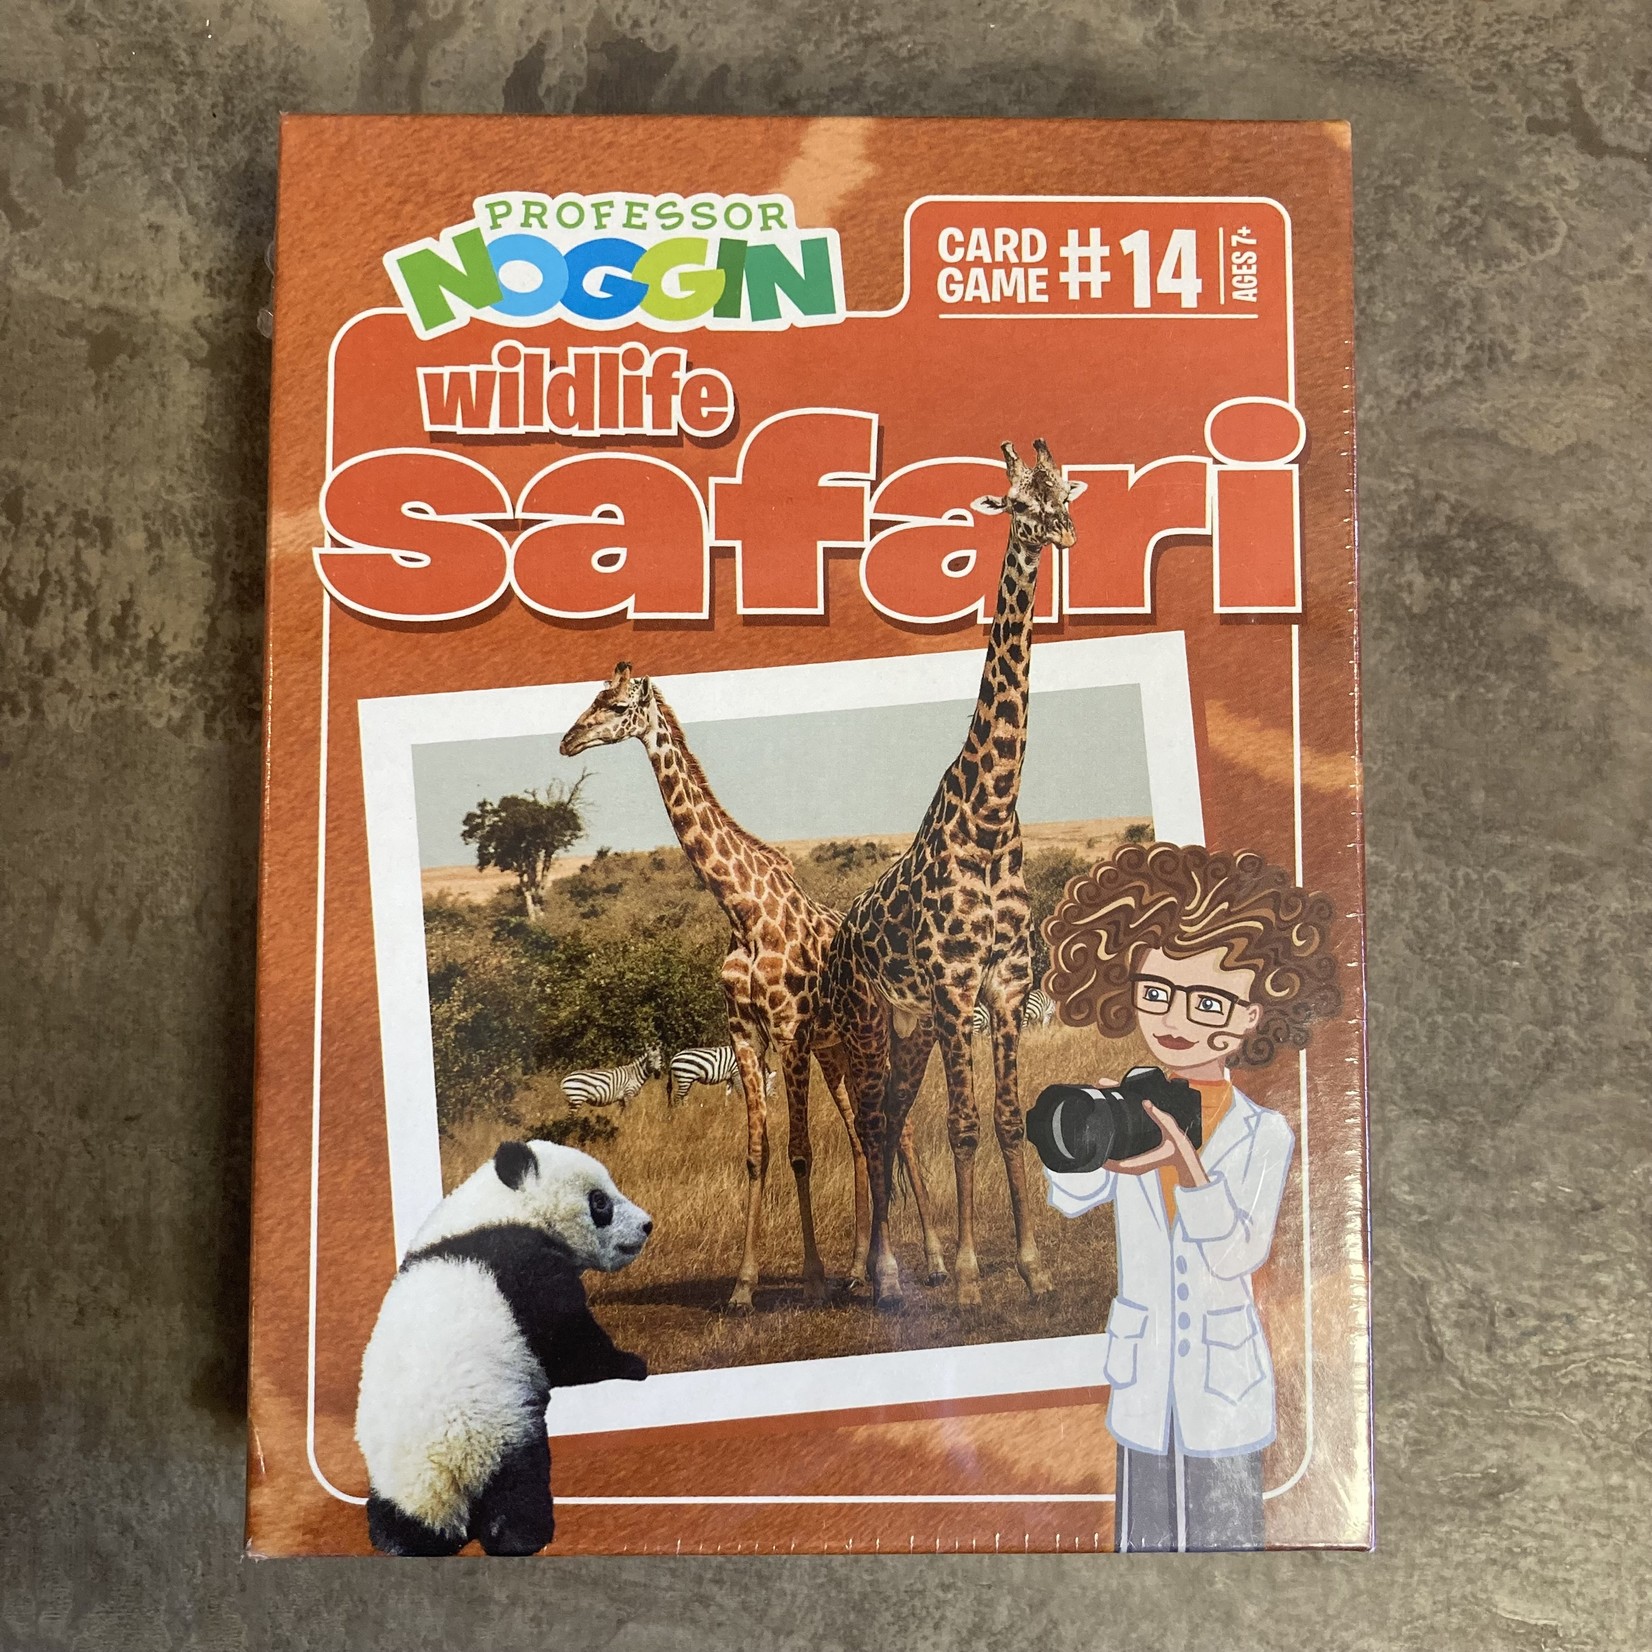 Professor Noggin Game - Wildlife Safari